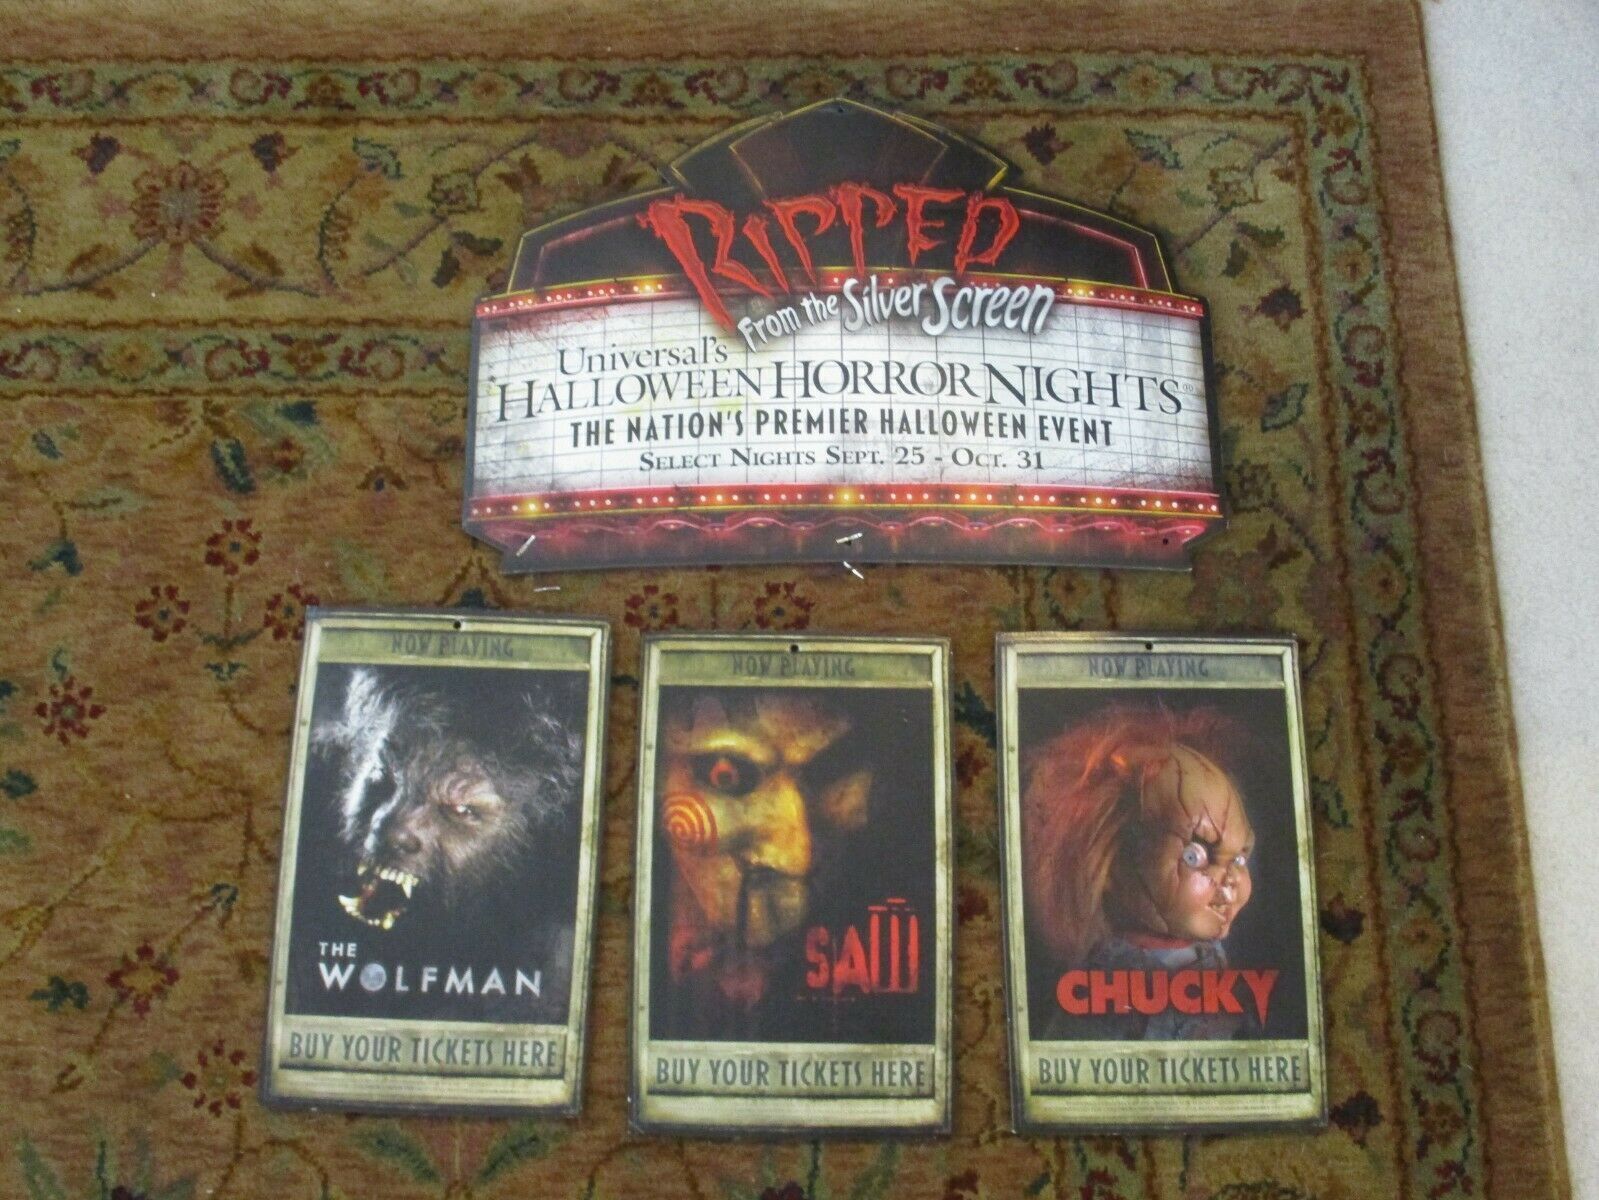 Halloween Horror Nights Universal Studios 2009 Display Saw Chucky The Wolfman